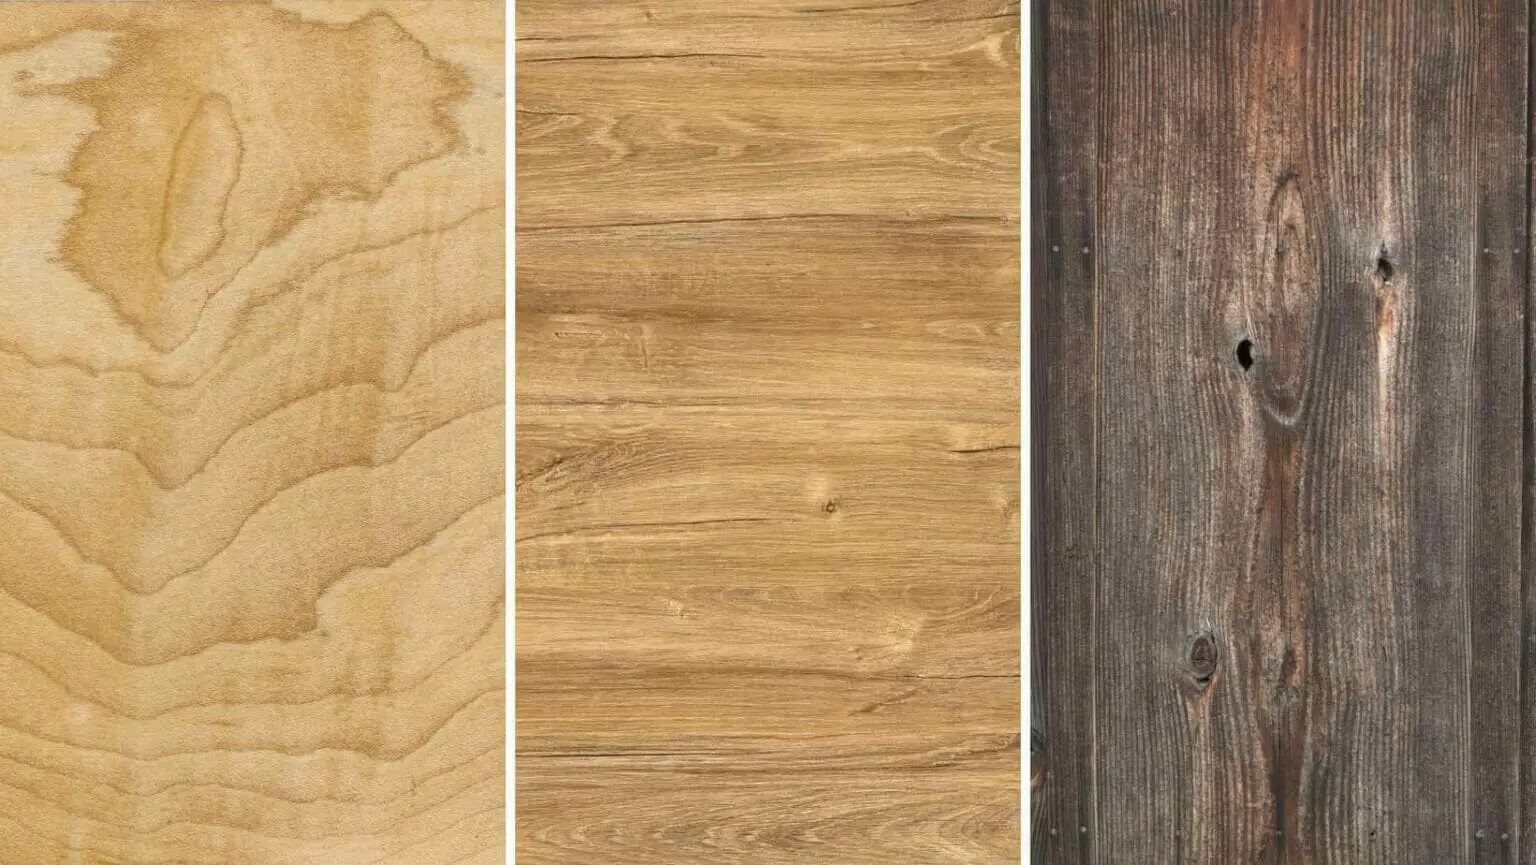 Types Of Wood Grain Patterns 1536x865 